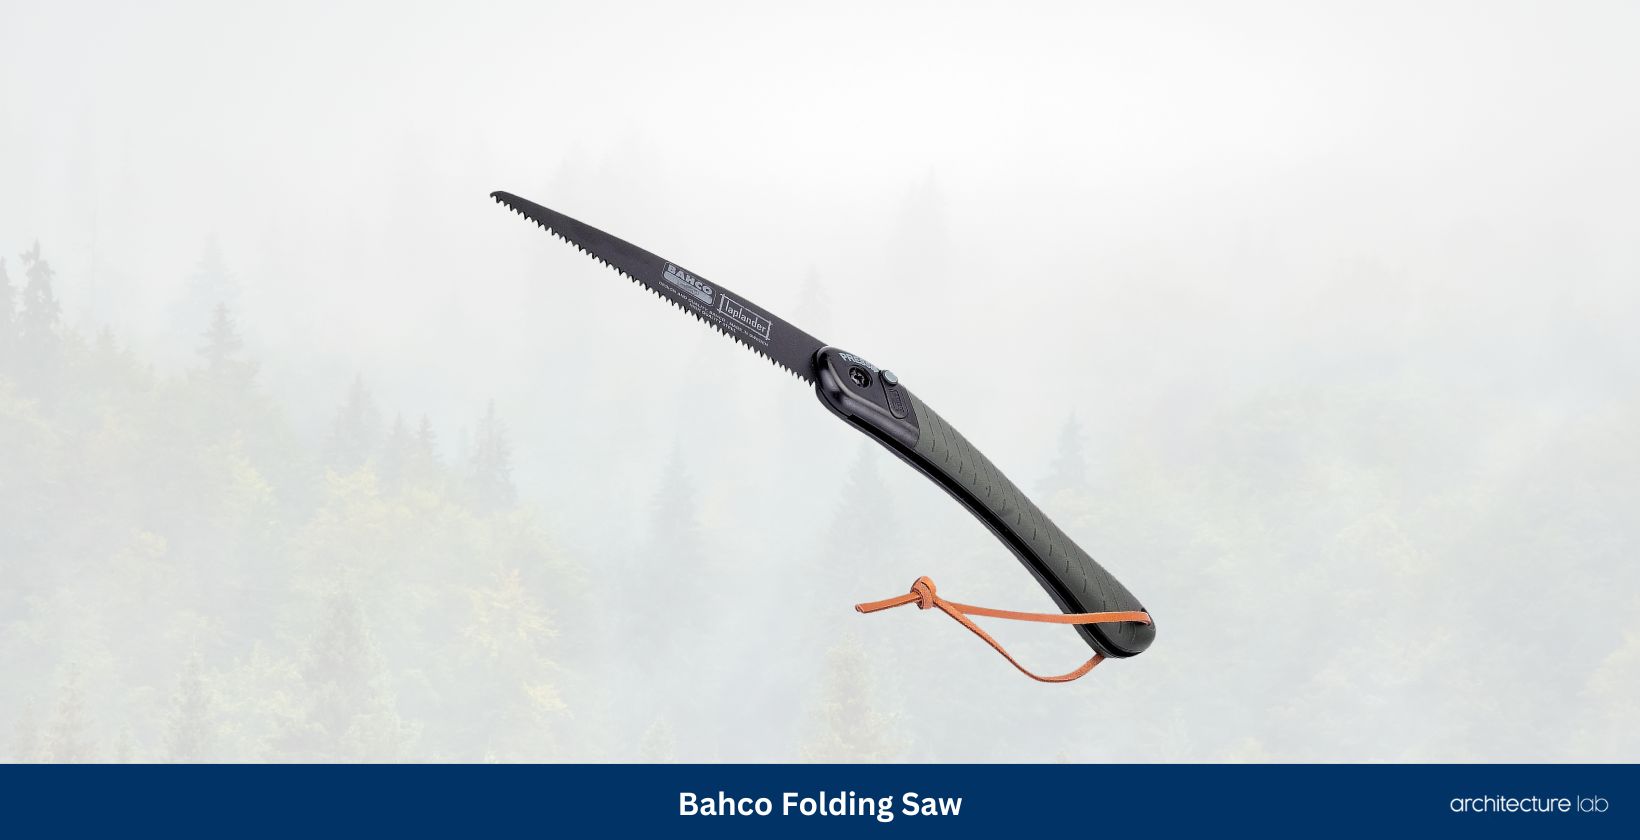 Bahco folding saw